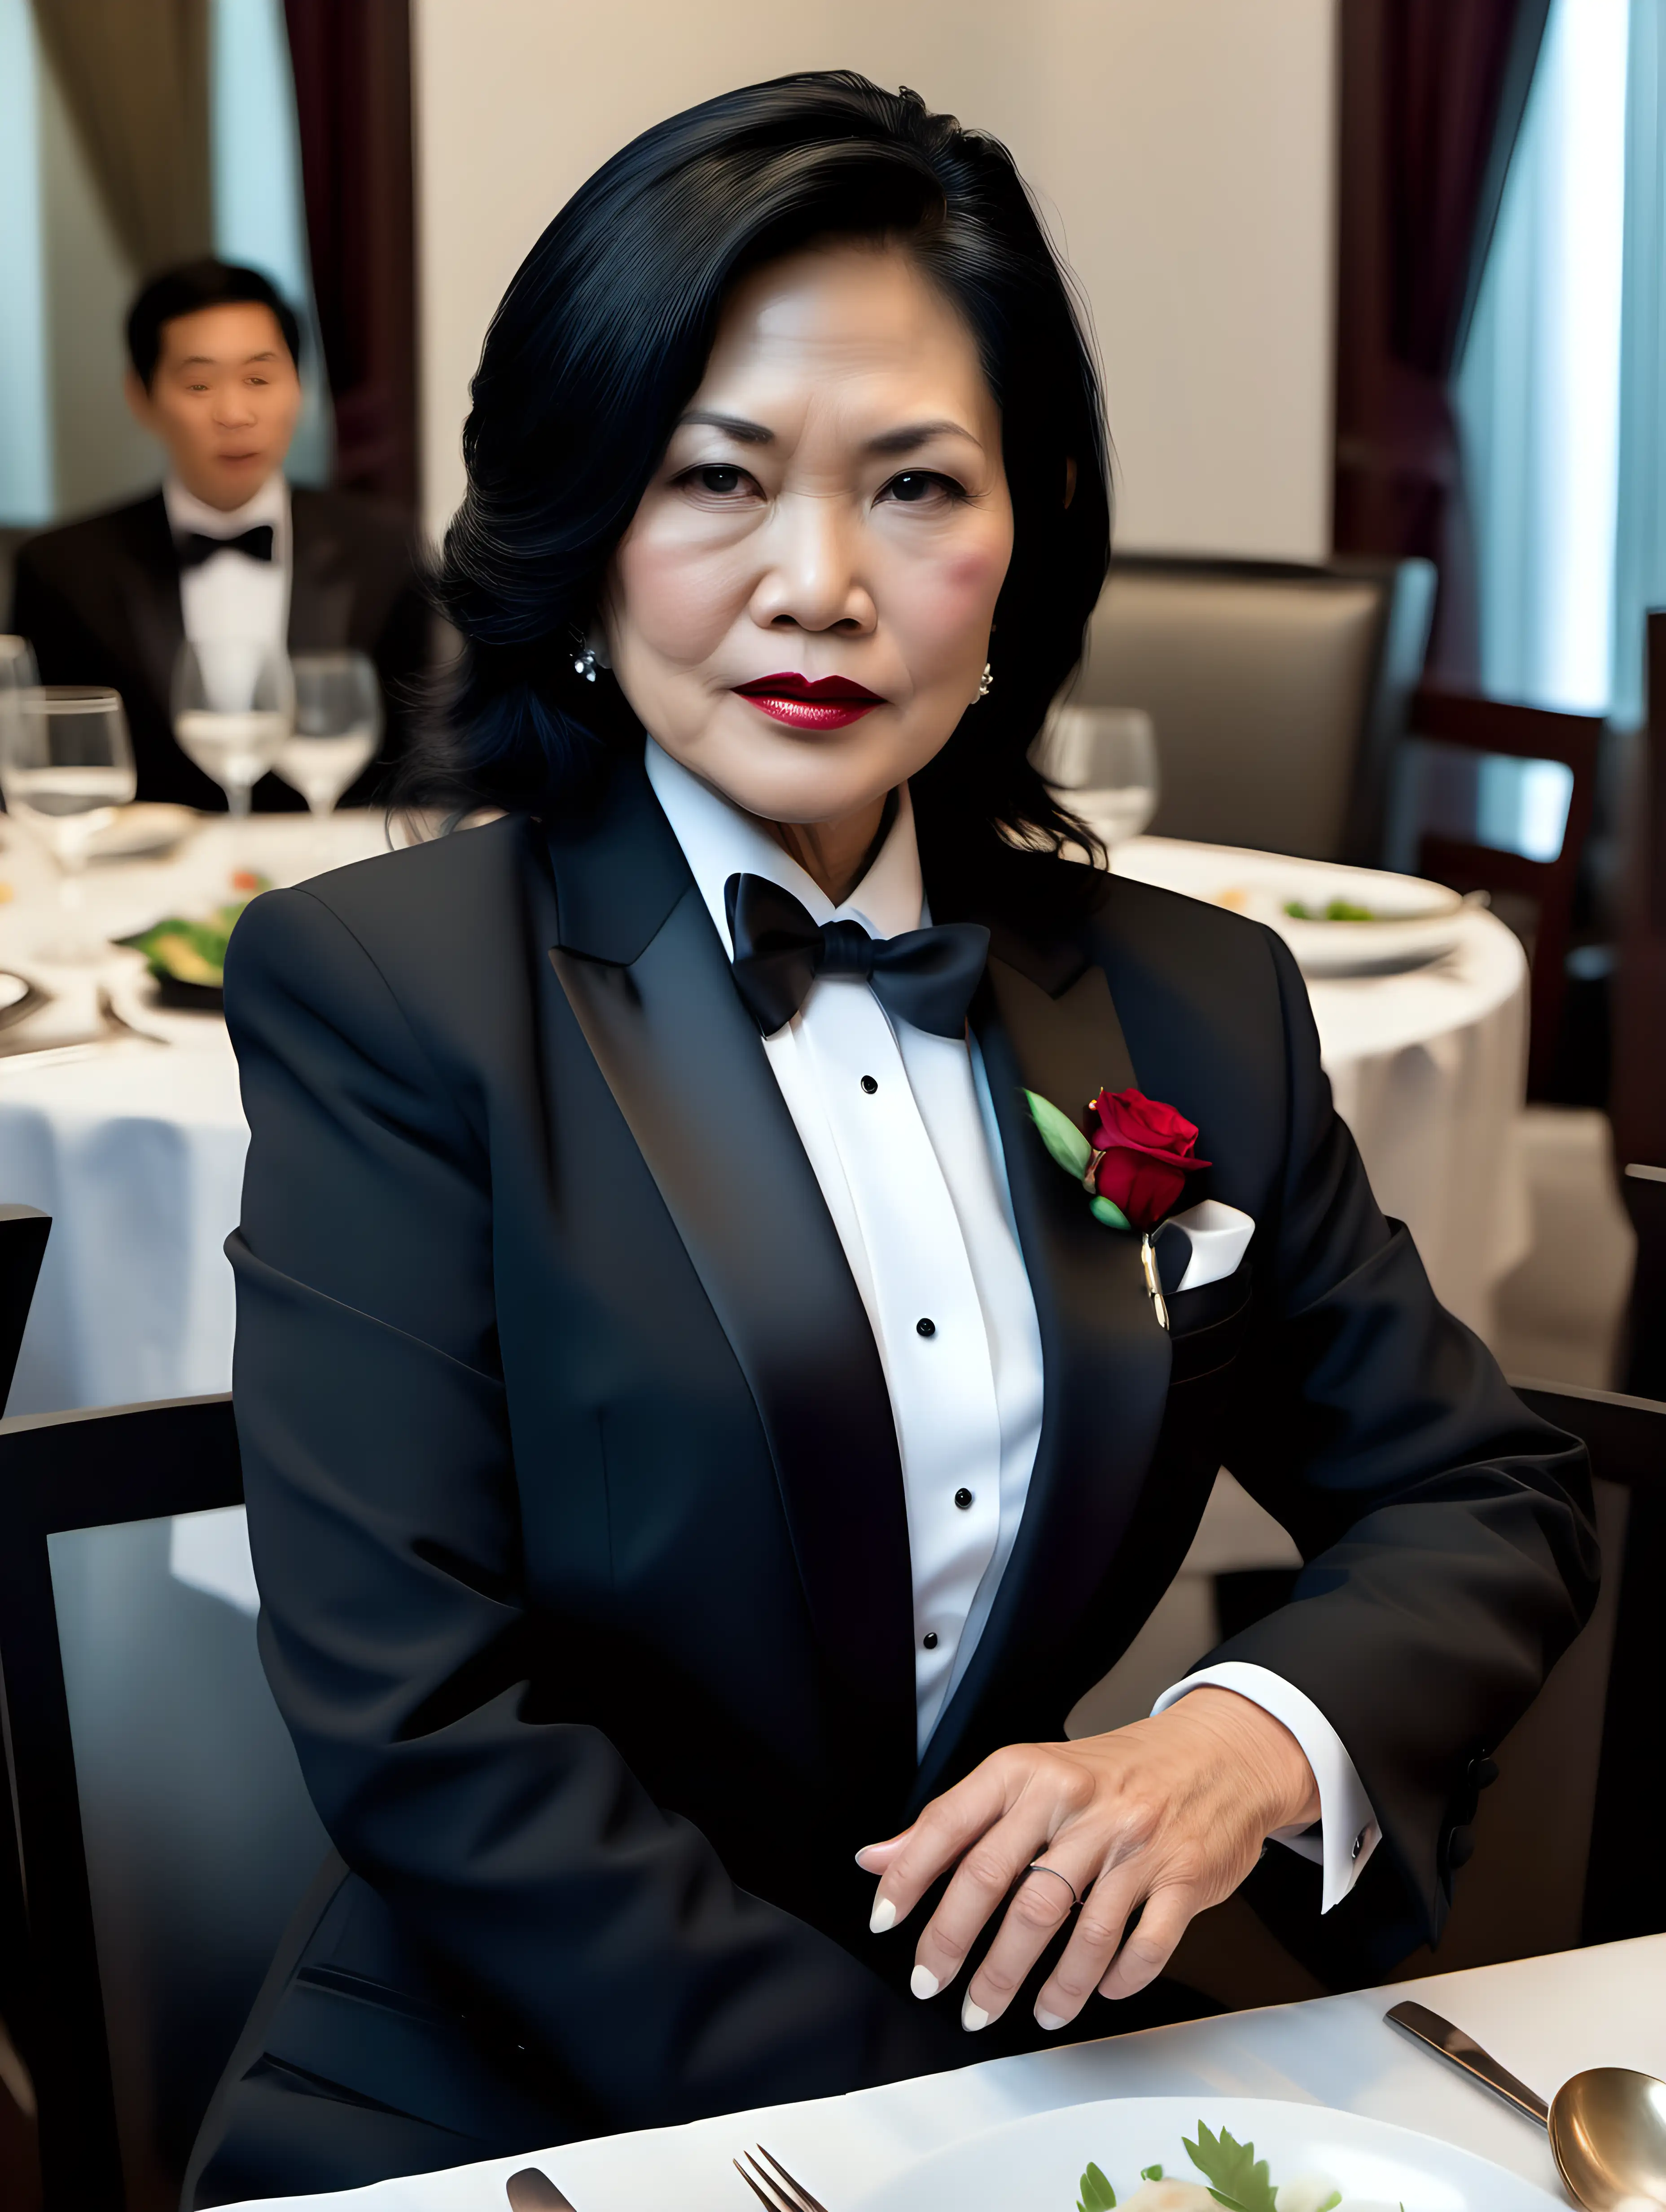 Sophisticated-Vietnamese-Businesswoman-in-Tuxedo-at-Dinner-Table